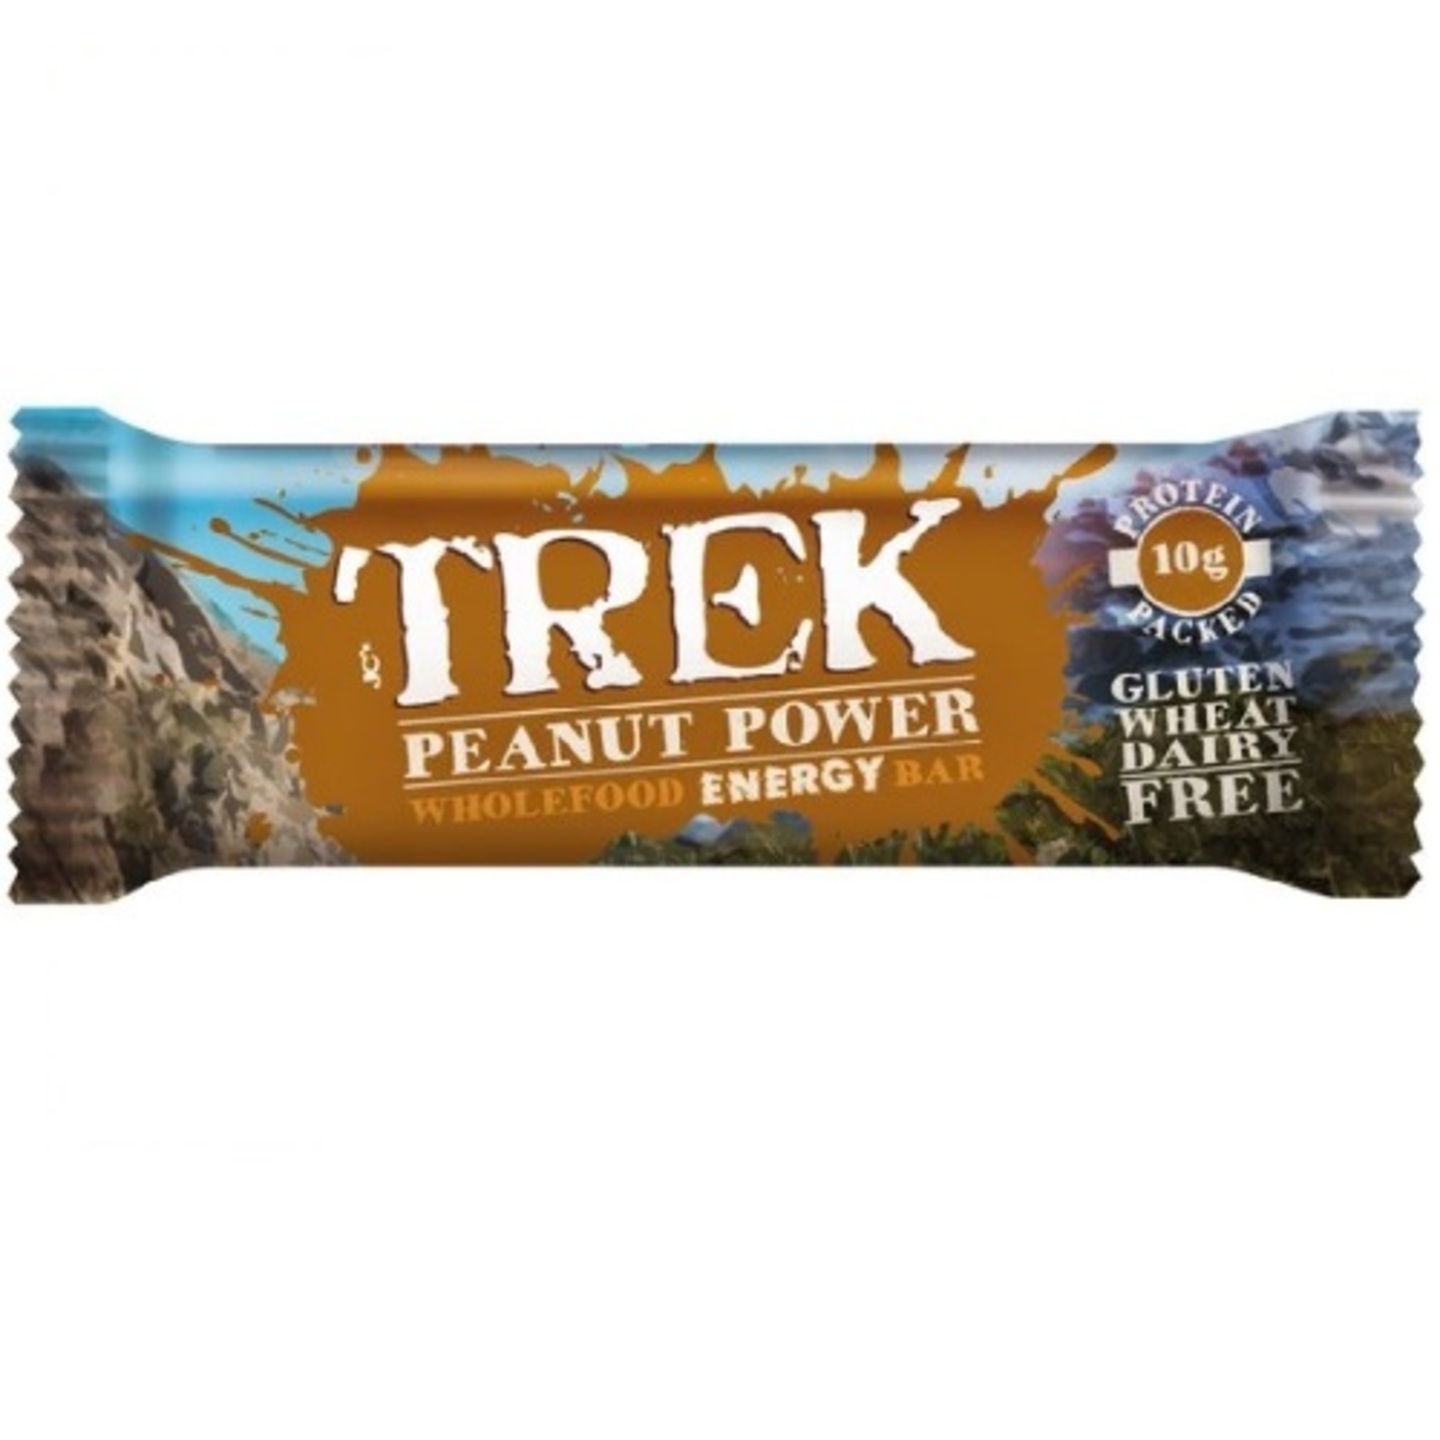 JCs Trek - Peanut Power Wholefood Energy Bar